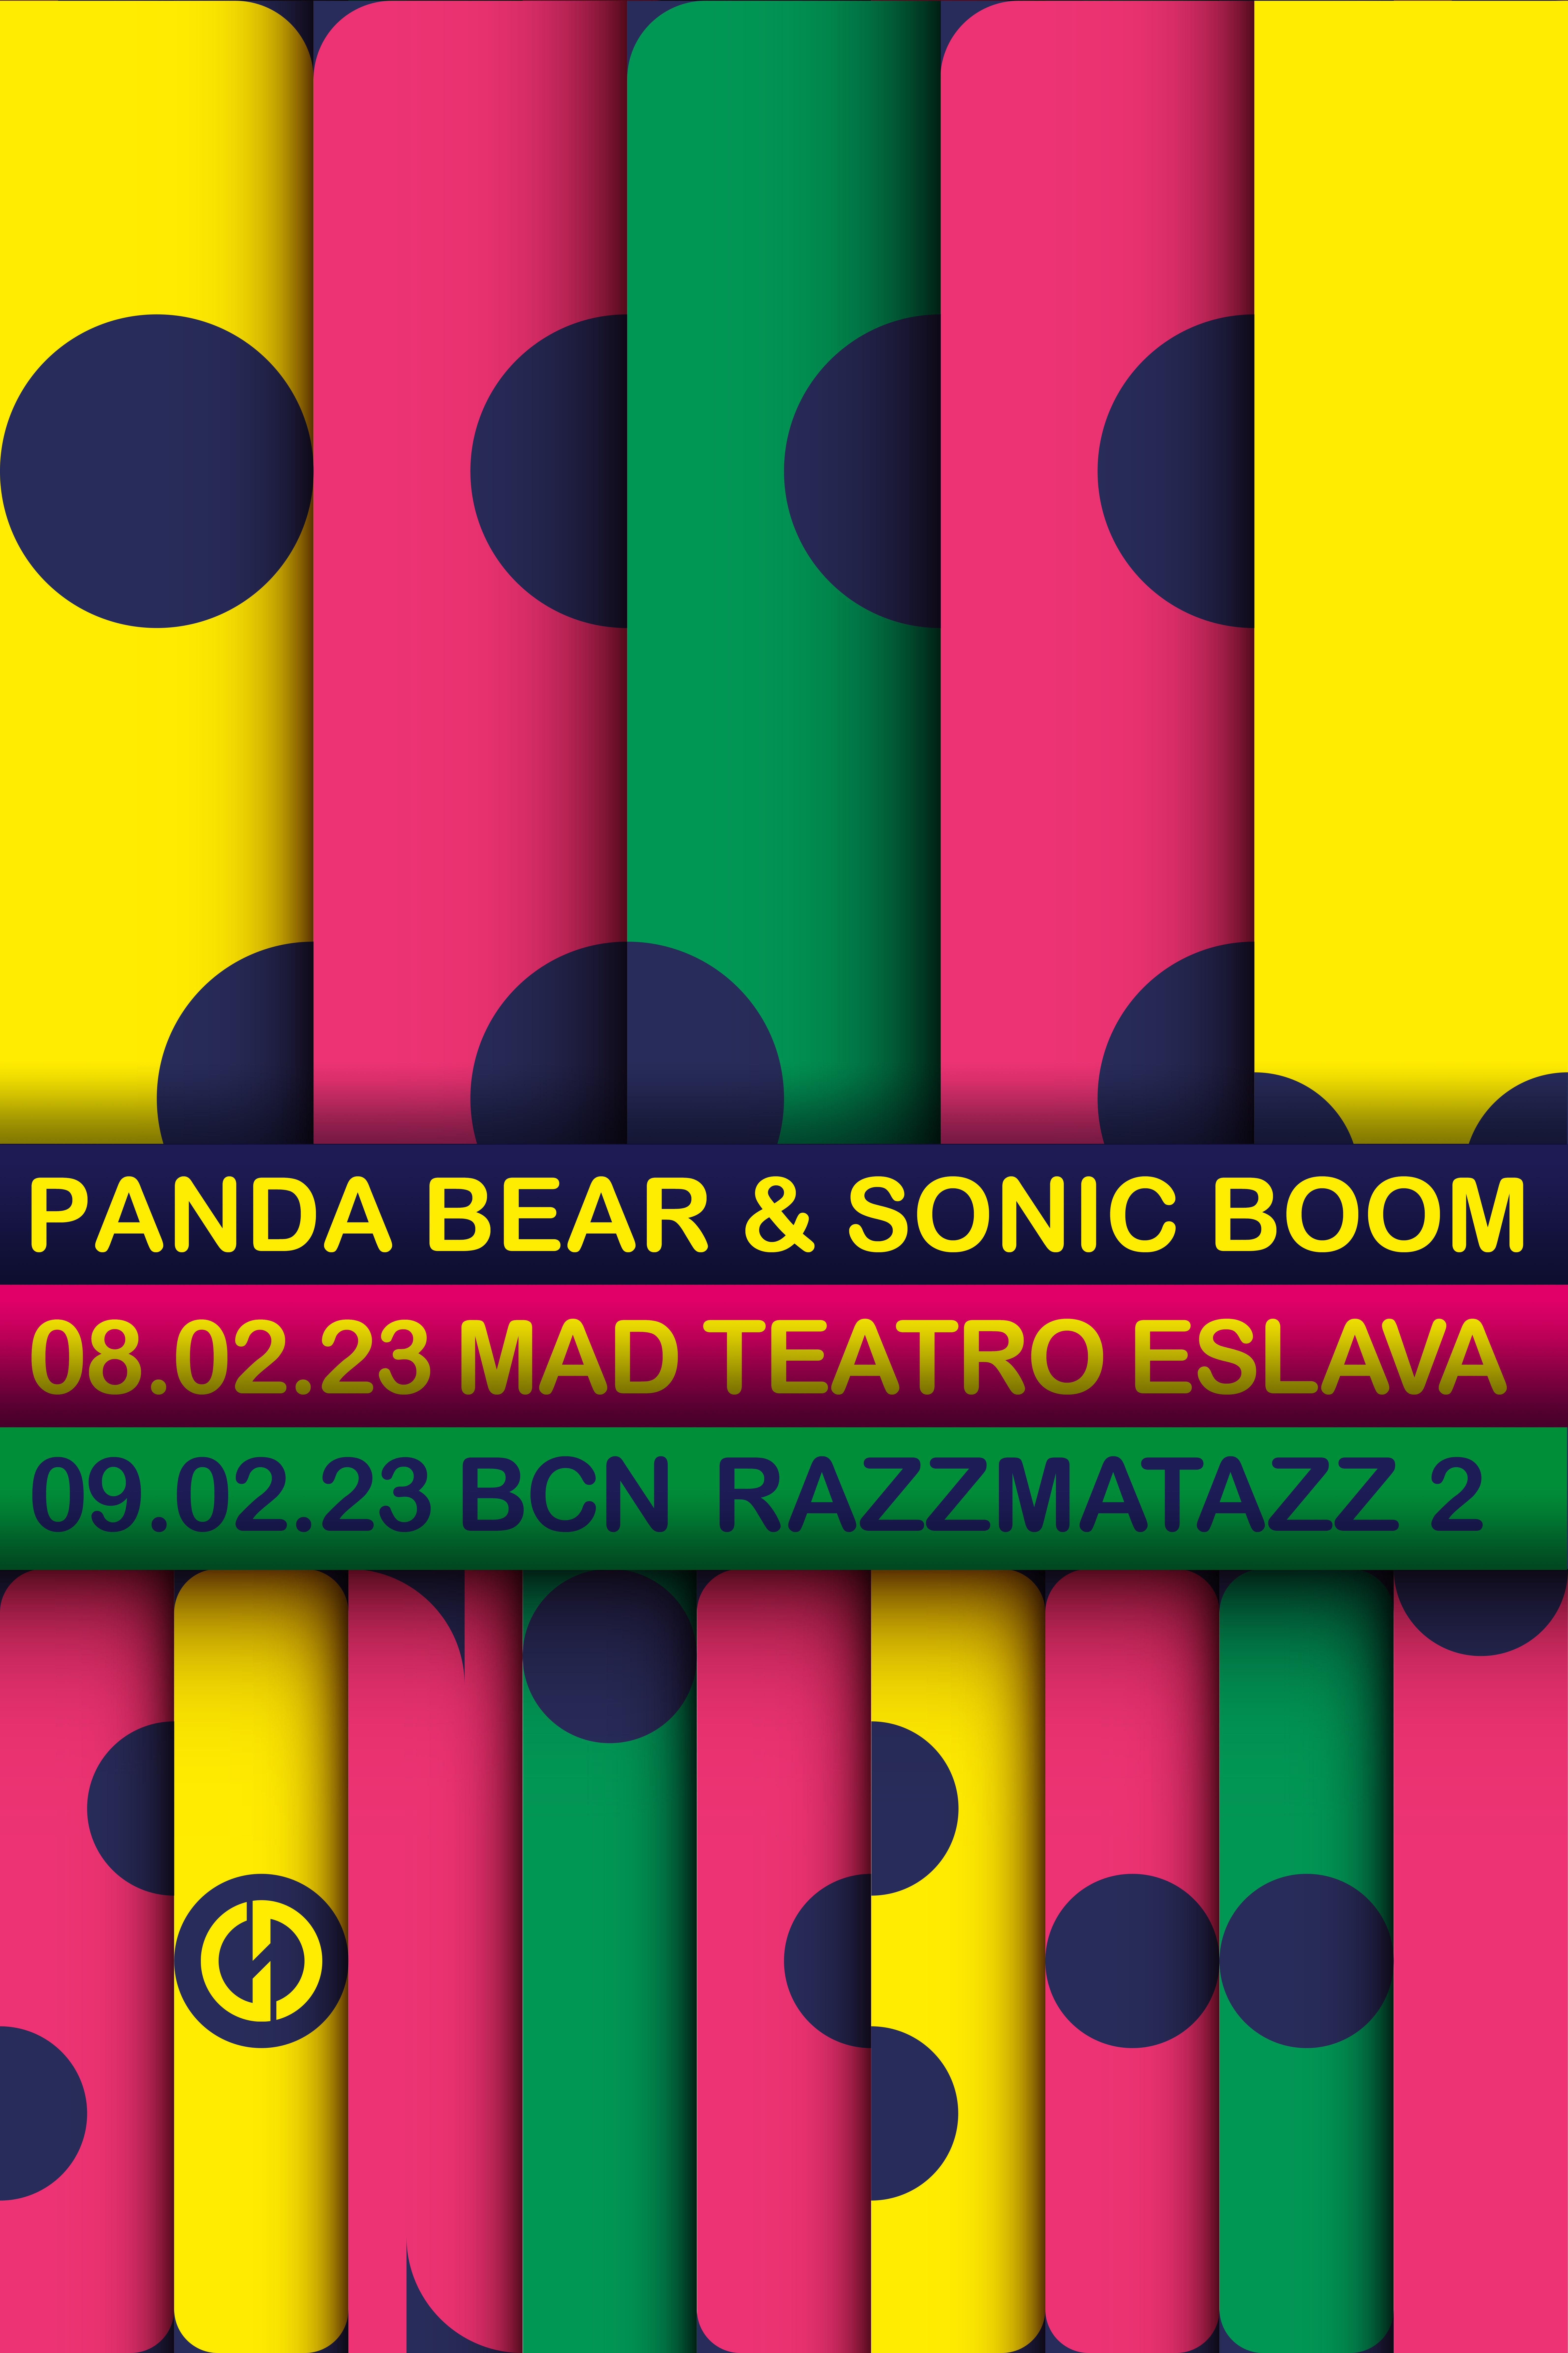 FOTO PANDA BEAR & SONIC BOOM